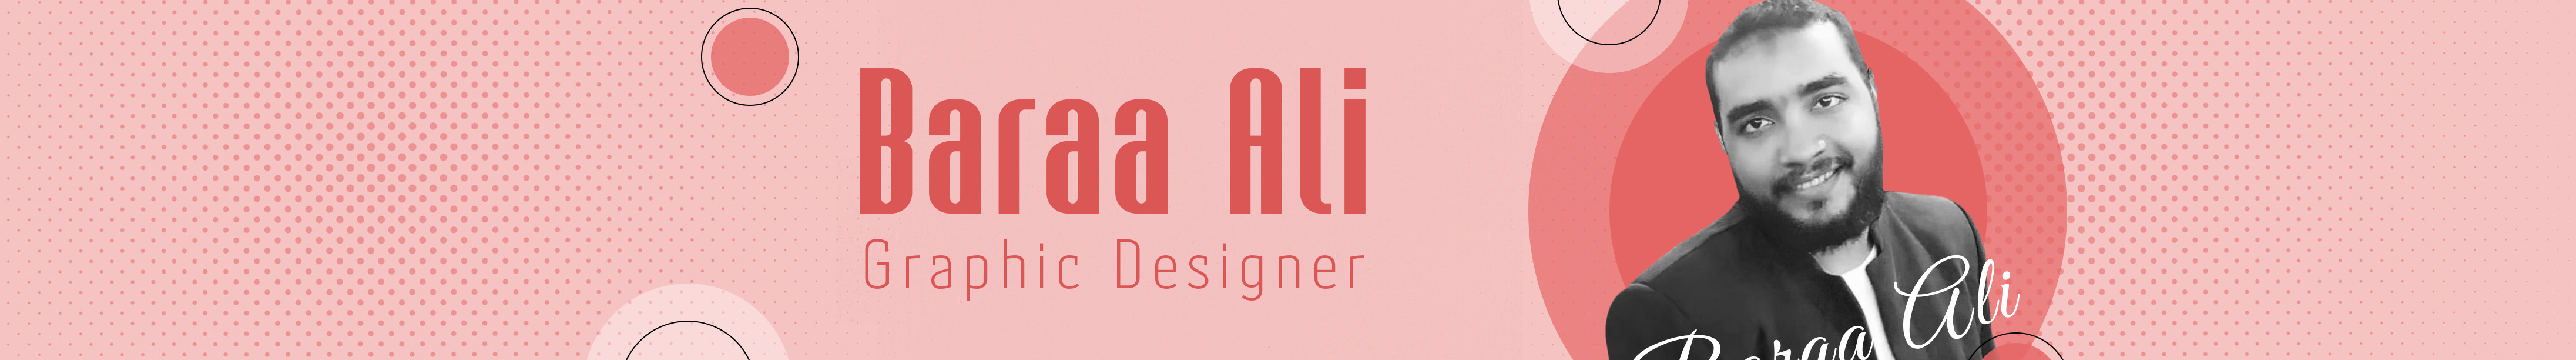 BARAA ALI's profile banner